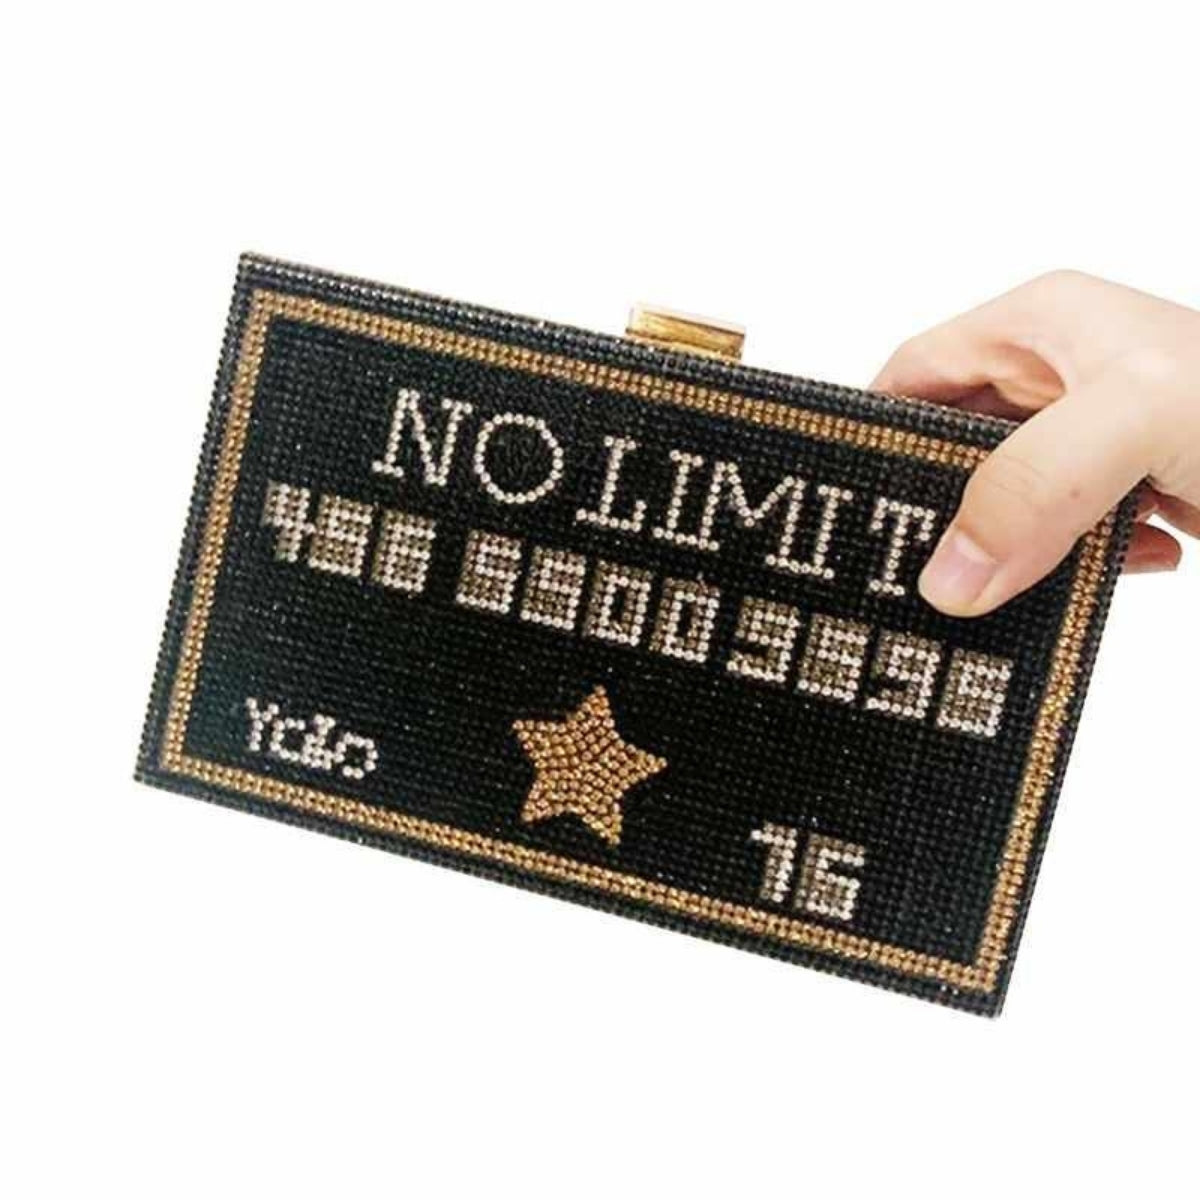 Black No Limit Card Hardcase Clutch